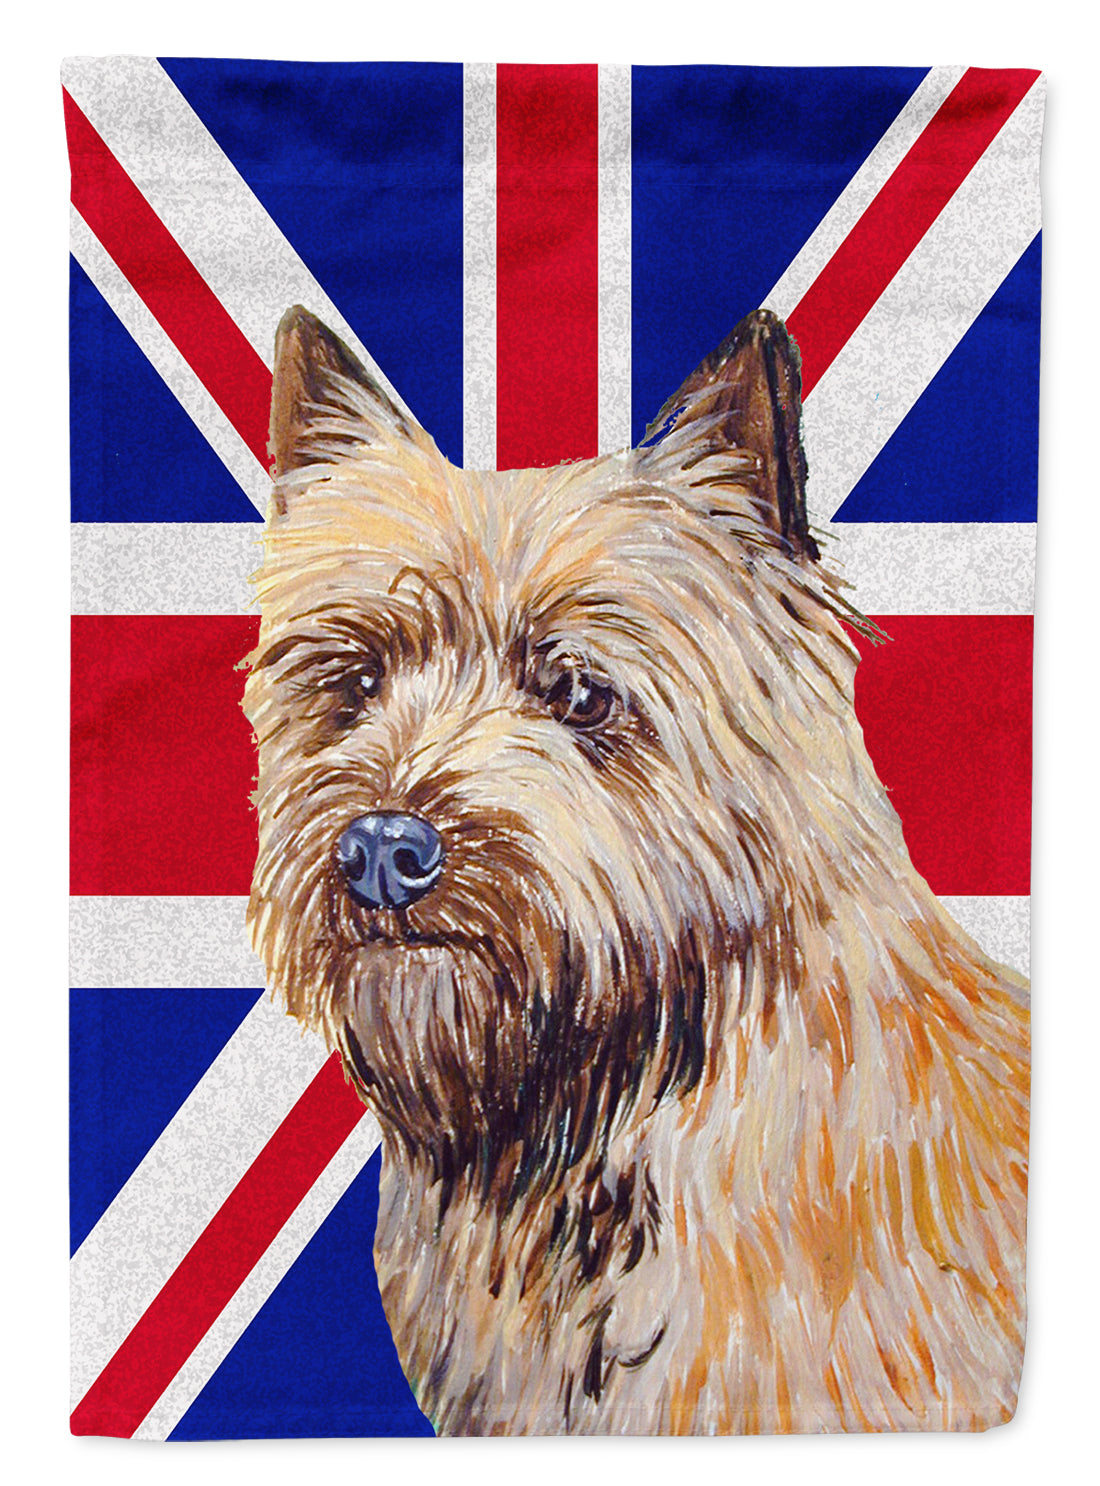 Cairn Terrier with English Union Jack British Flag Flag Garden Size LH9472GF